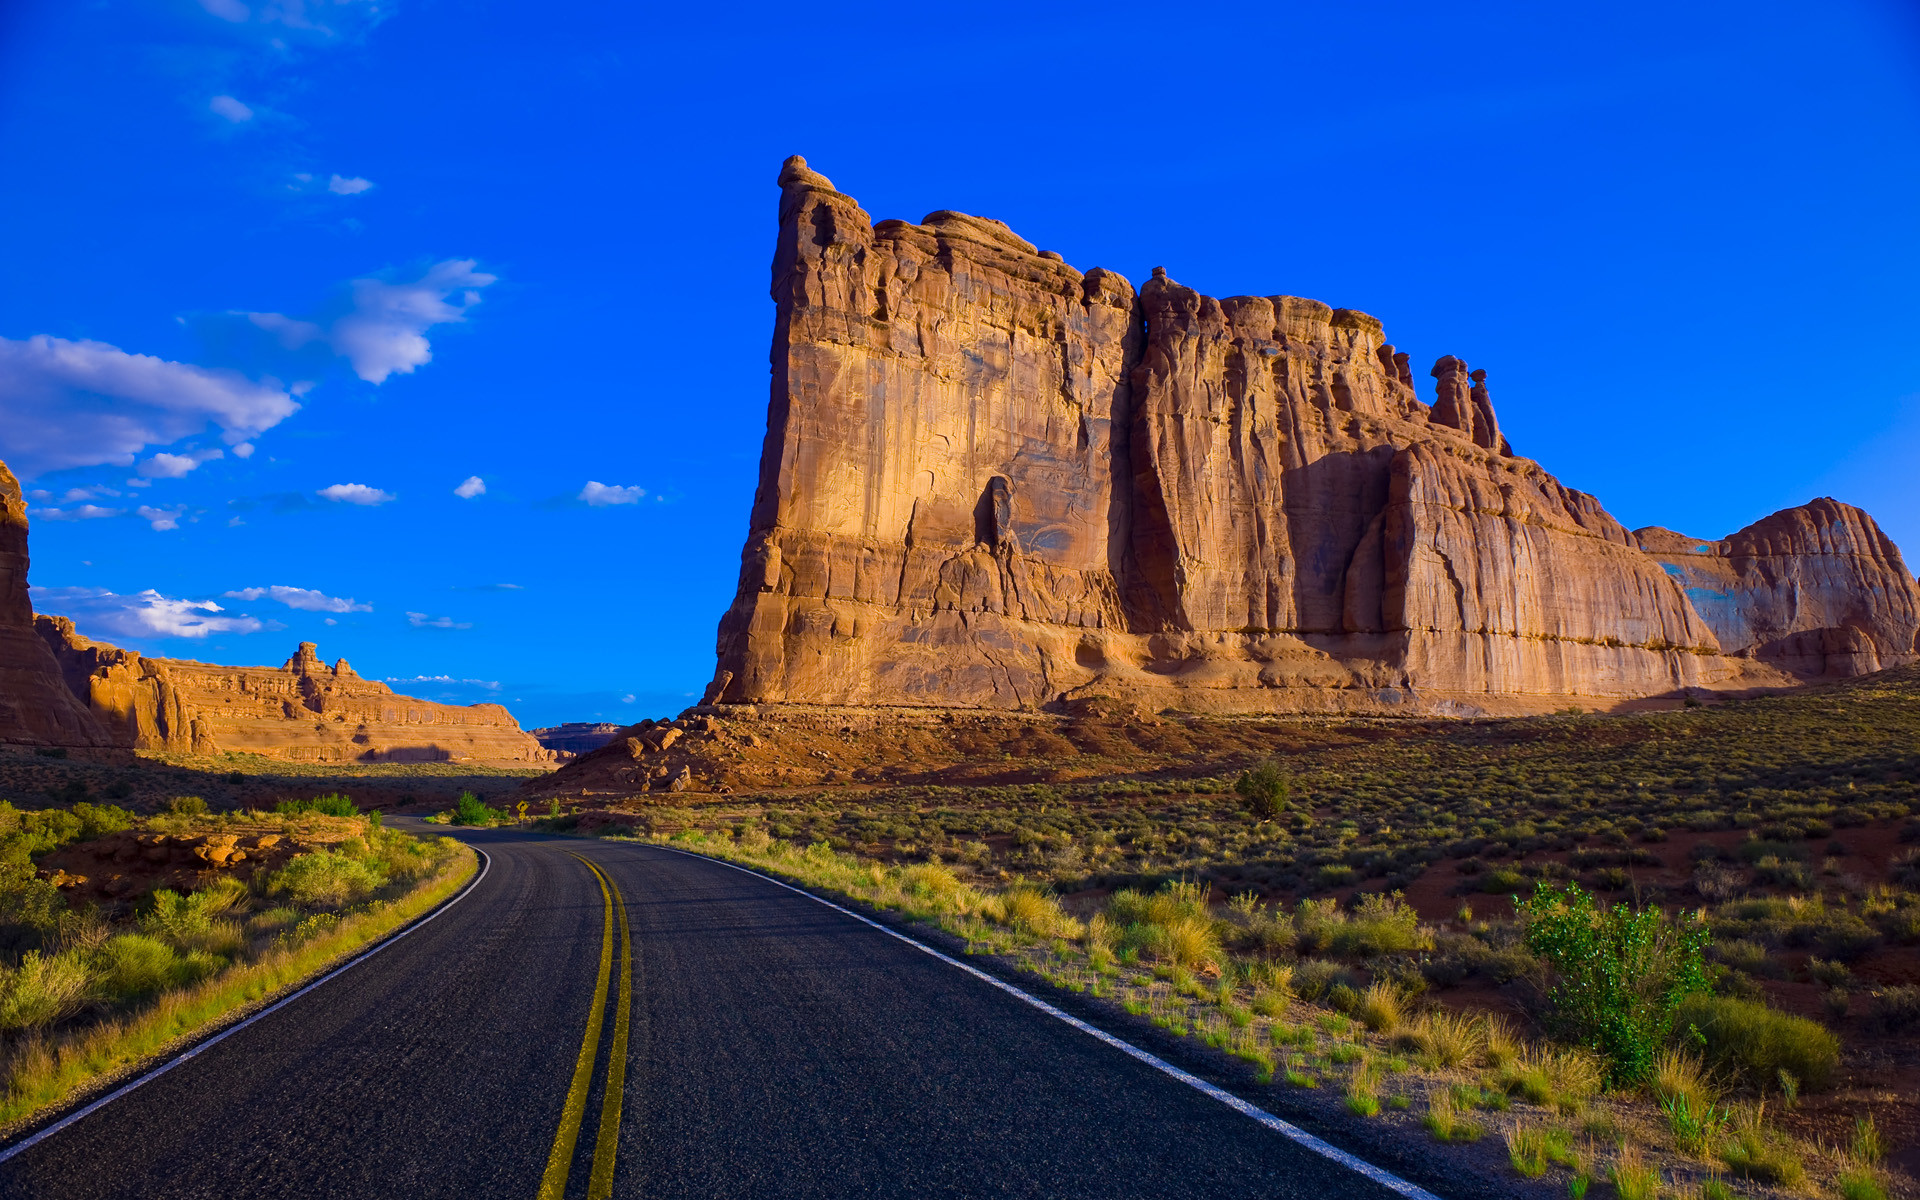 Windows 7 Desktop Backgrounds, Theme: American Road Trip